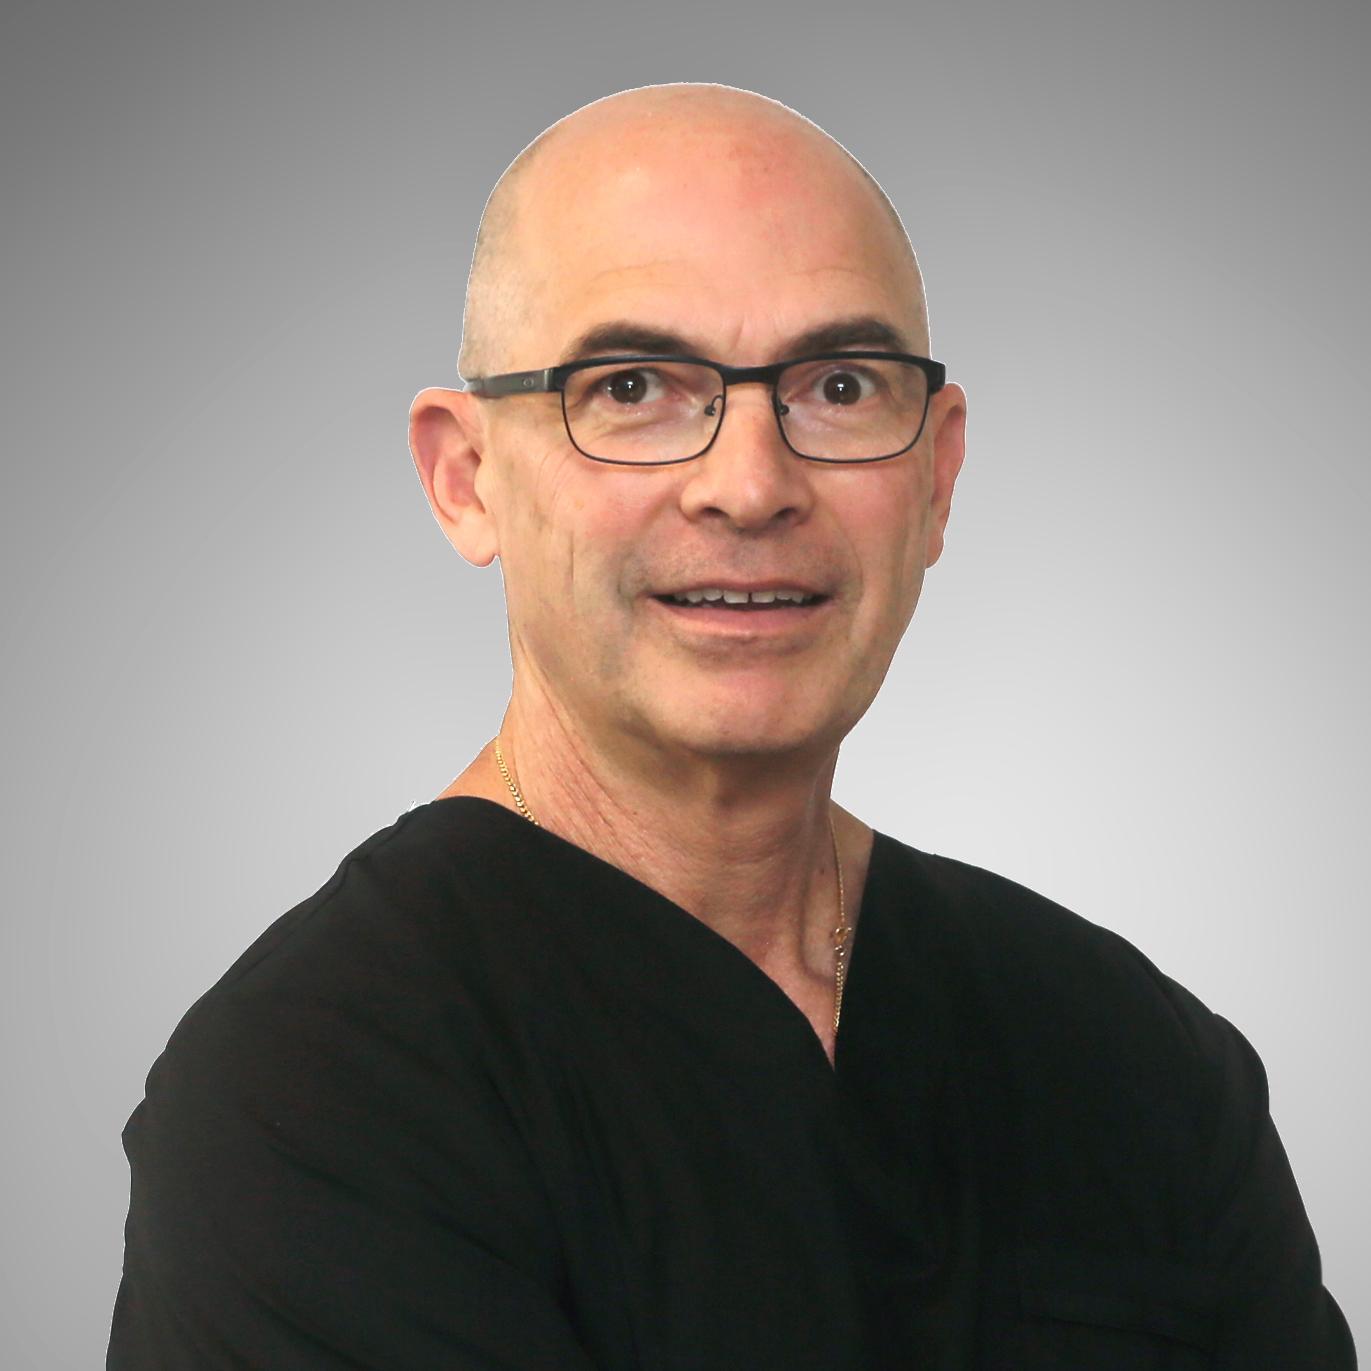 Dr. Aronica headshot image